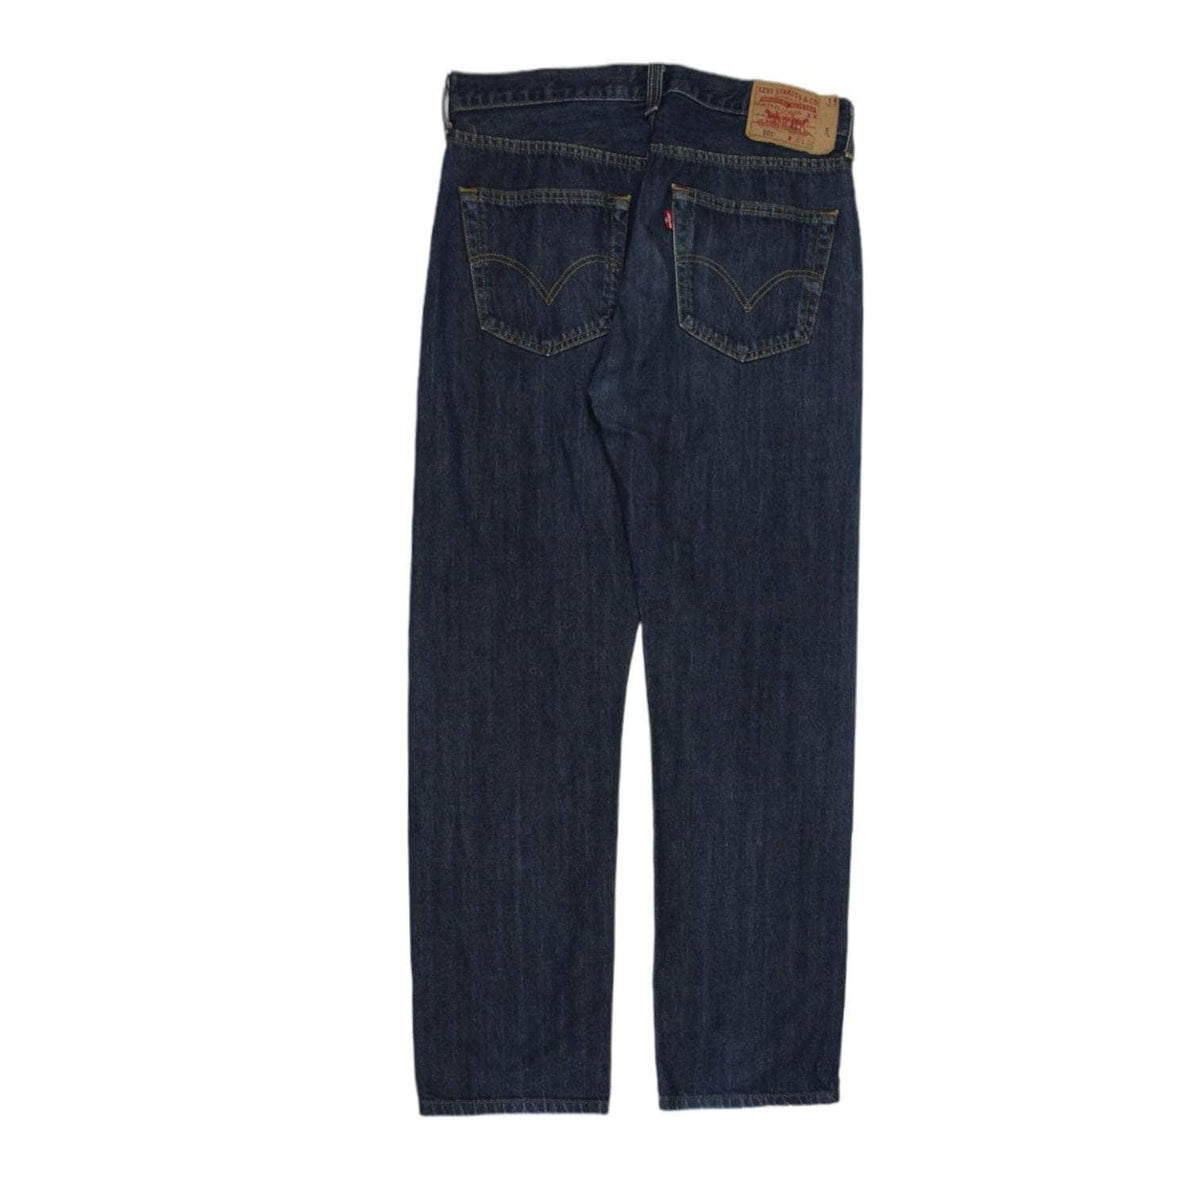 Levis 501 Straight Fit Blue Jeans